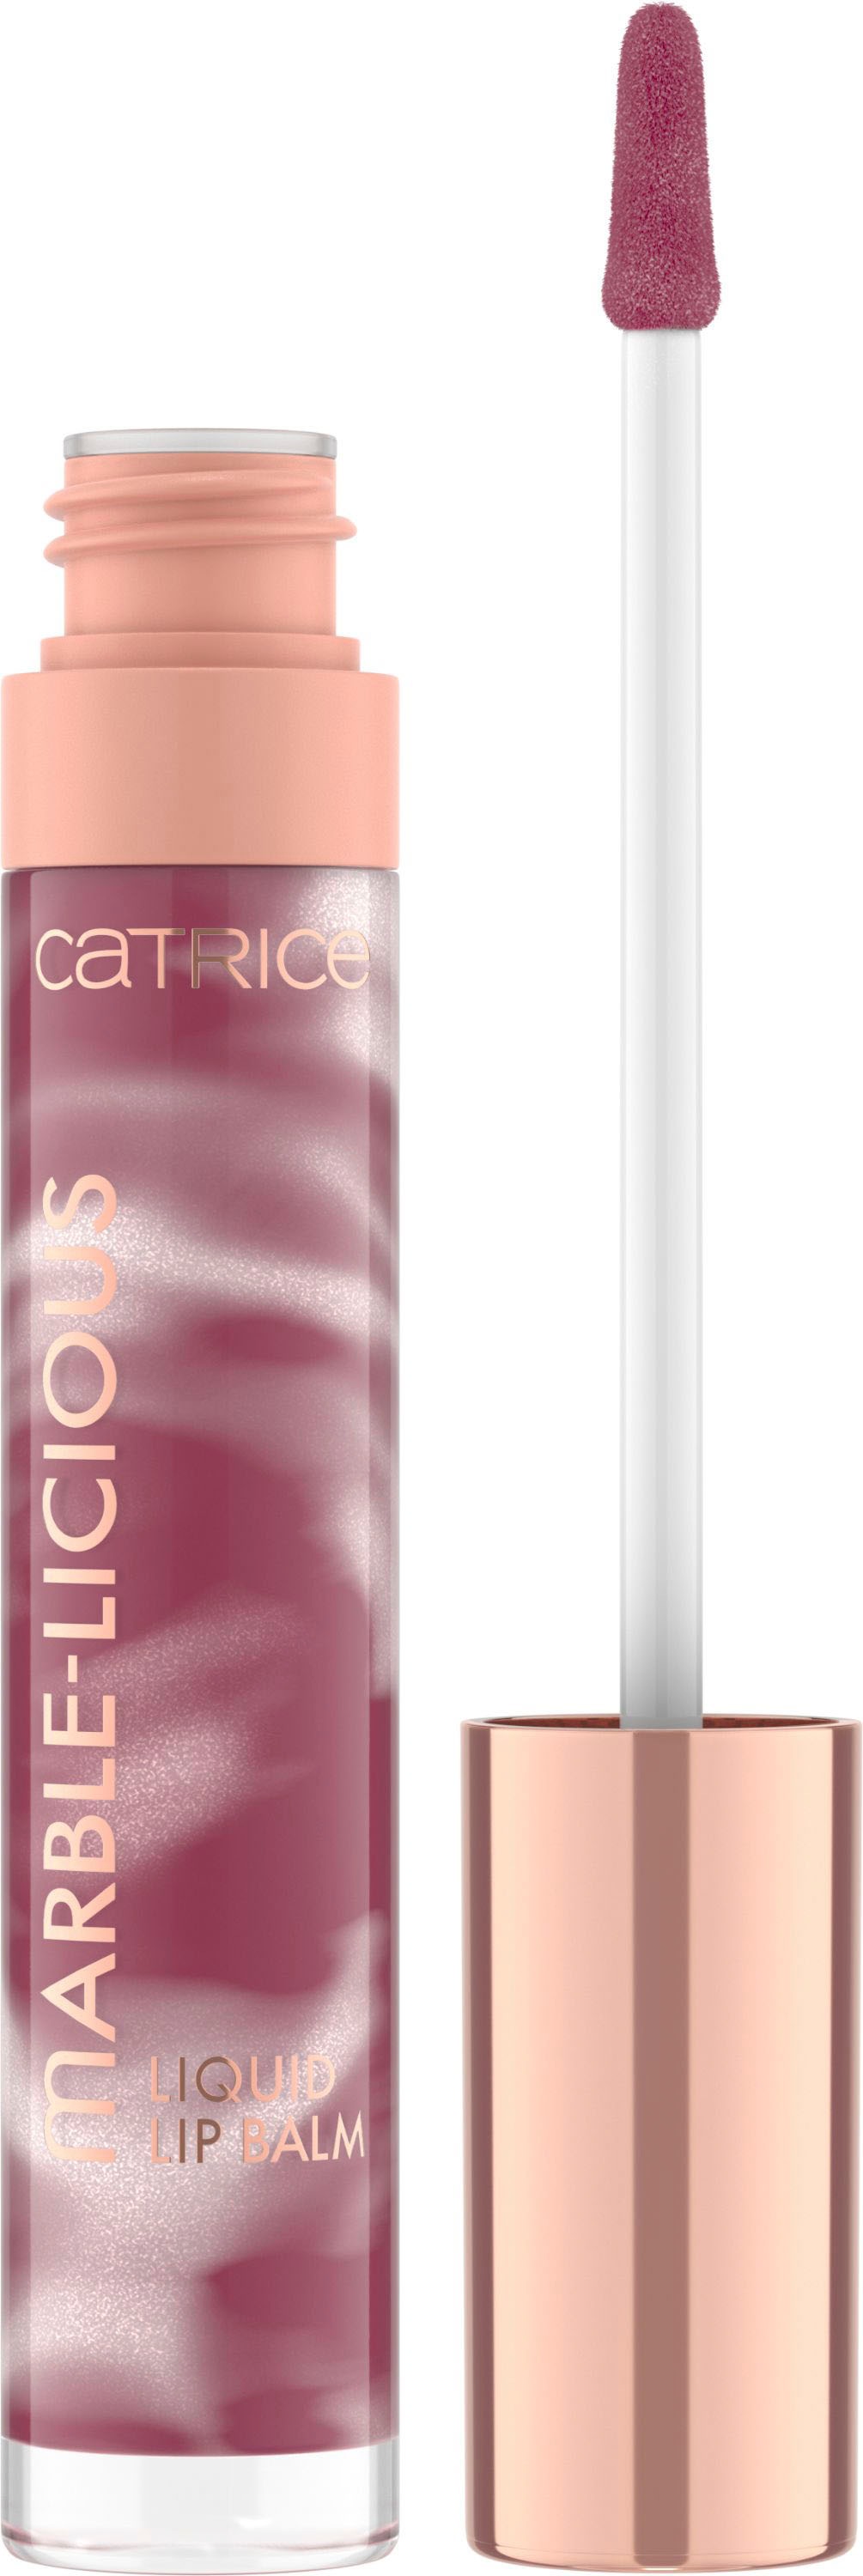 Catrice Lipgloss »Marble-licious Liquid Lip 3 OTTO bestellen (Set, Balm«, bei tlg.)